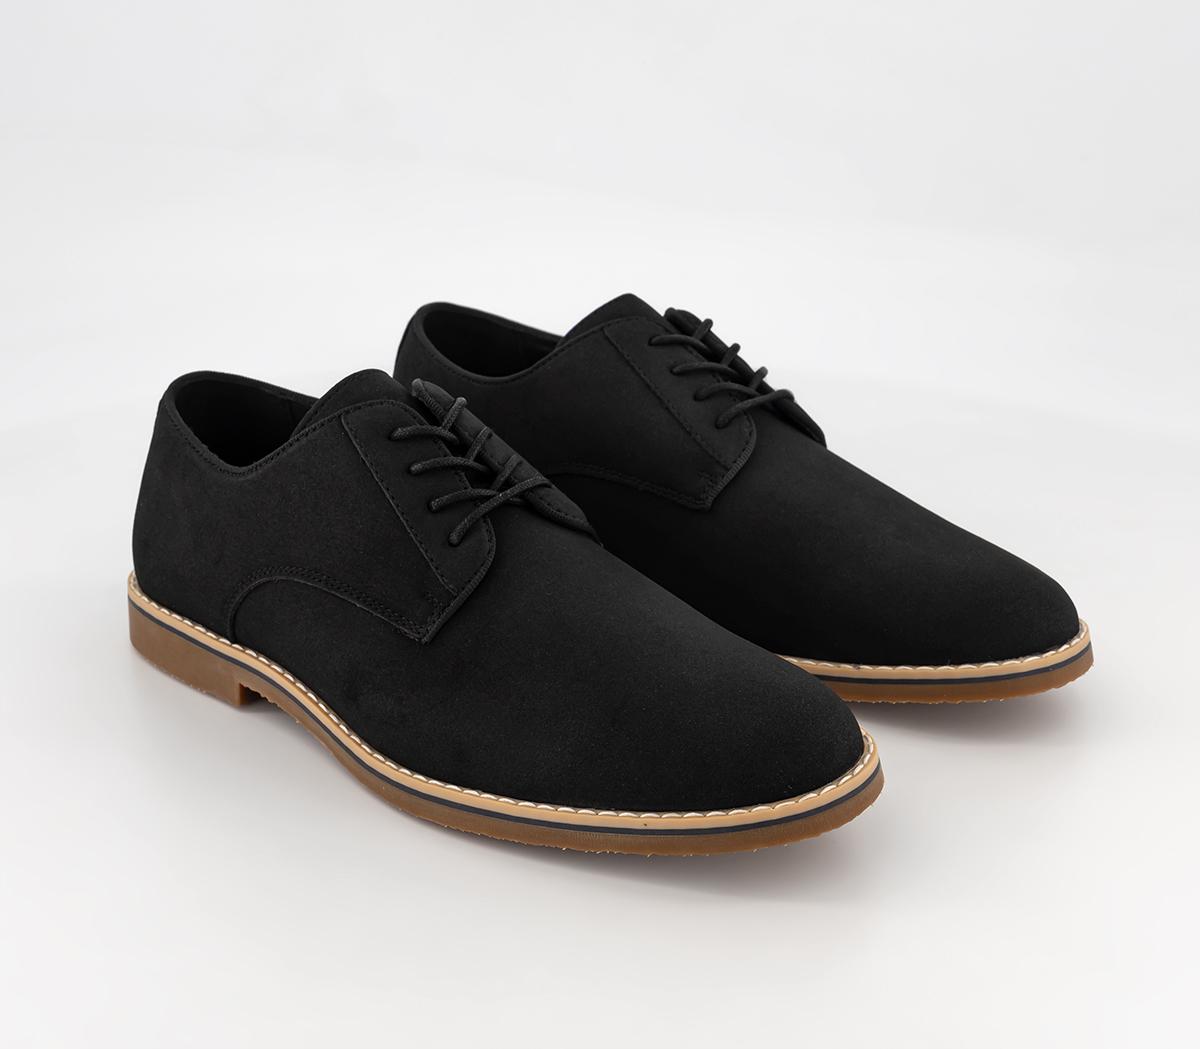 OFFICE Chandler Smart Derby Shoes Black - Men's Casual Shoes